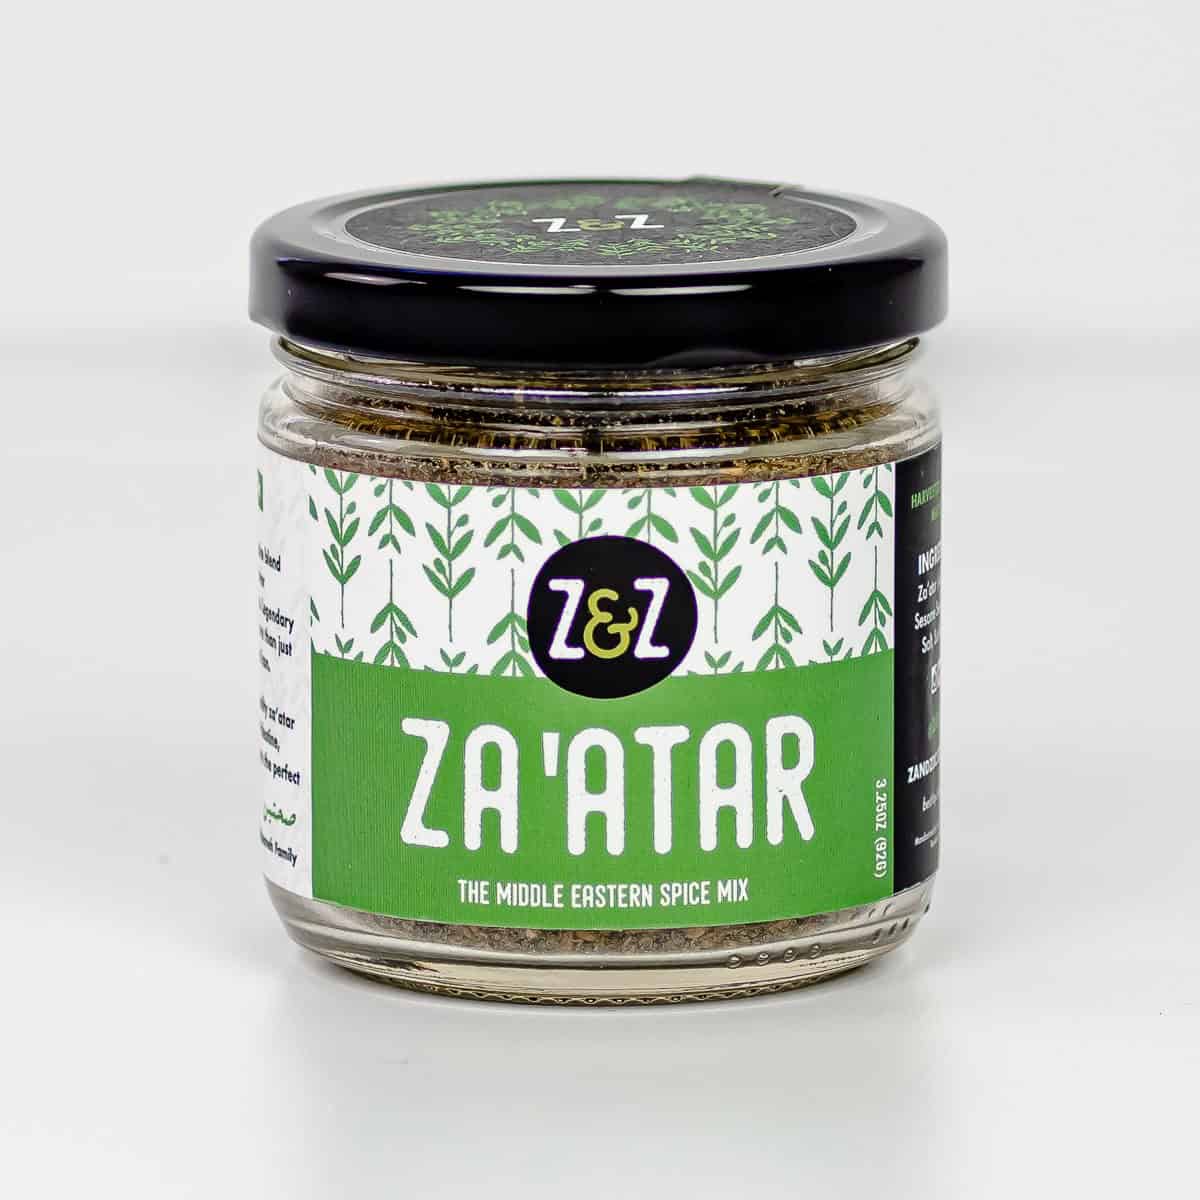 Jar of za'atar from the Mediterranean Dish shop.